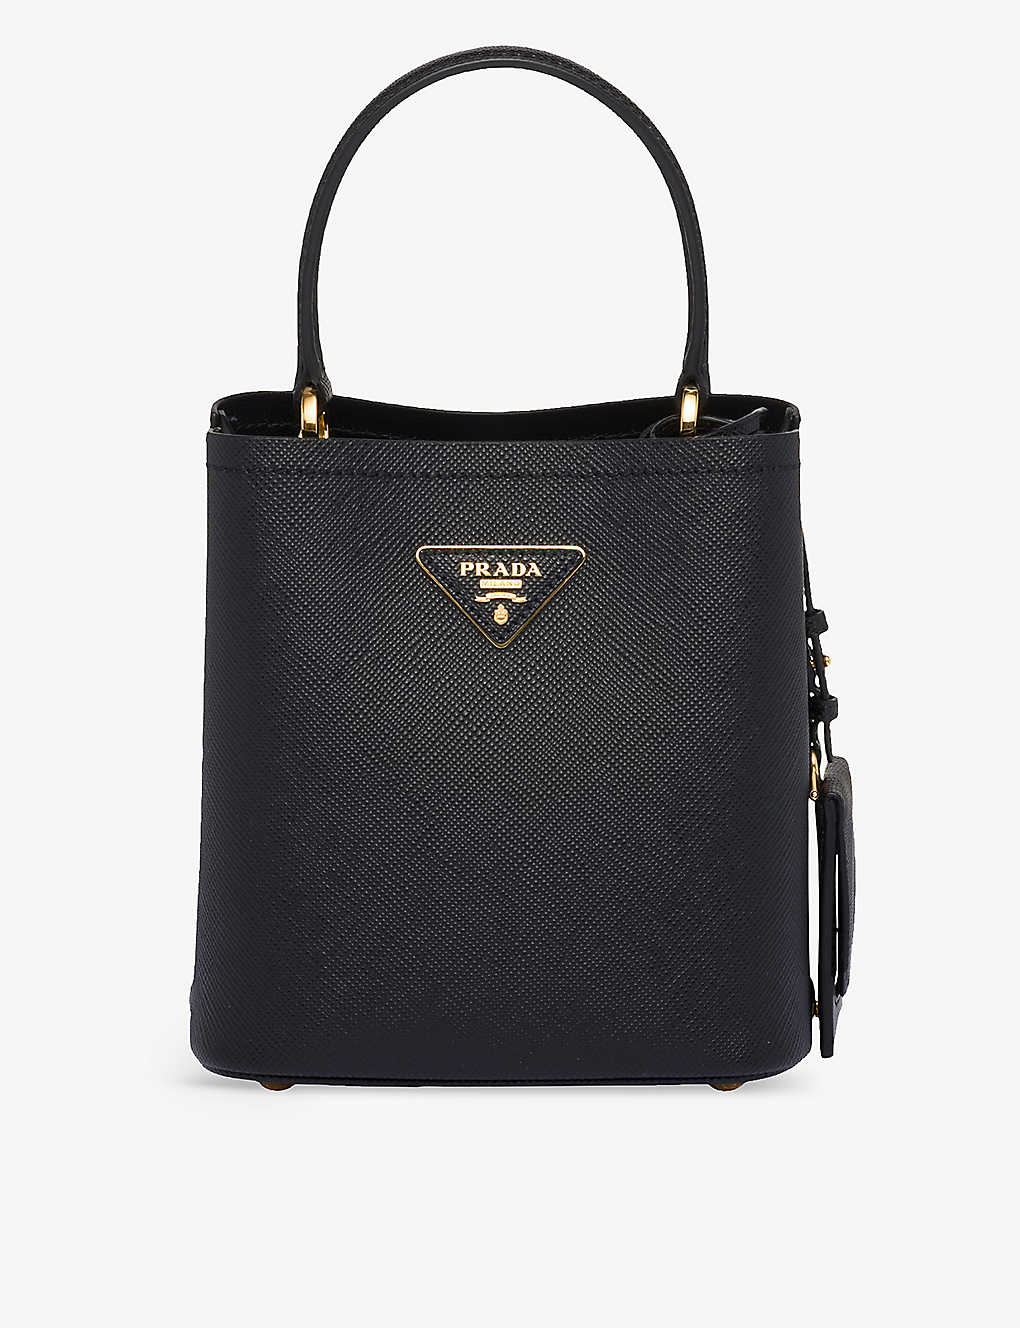 Prada Black Panier Small Saffiano-leather Top-handle Bag